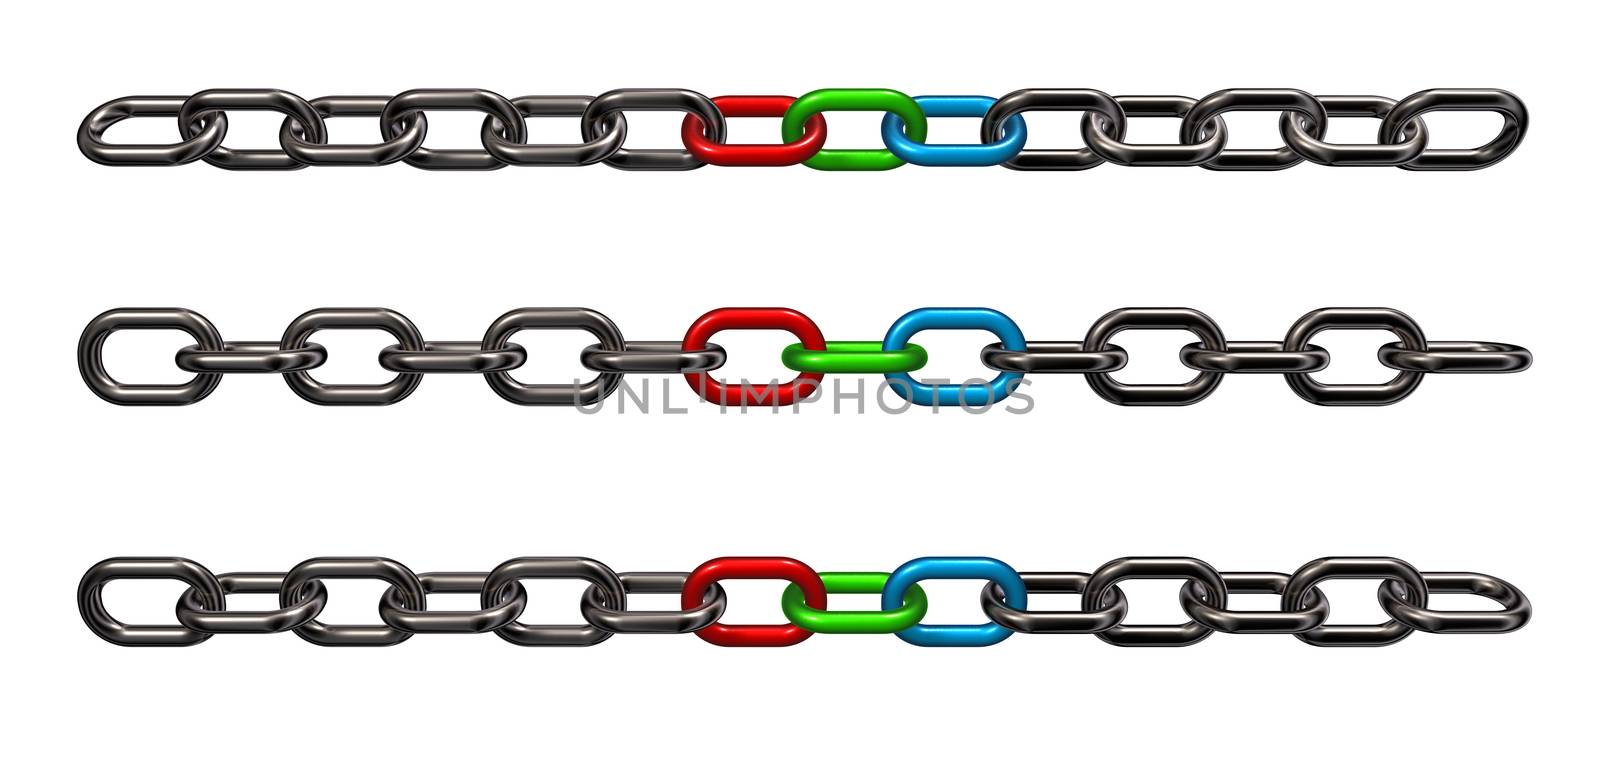 rgb metal chain on white background - 3d illustration